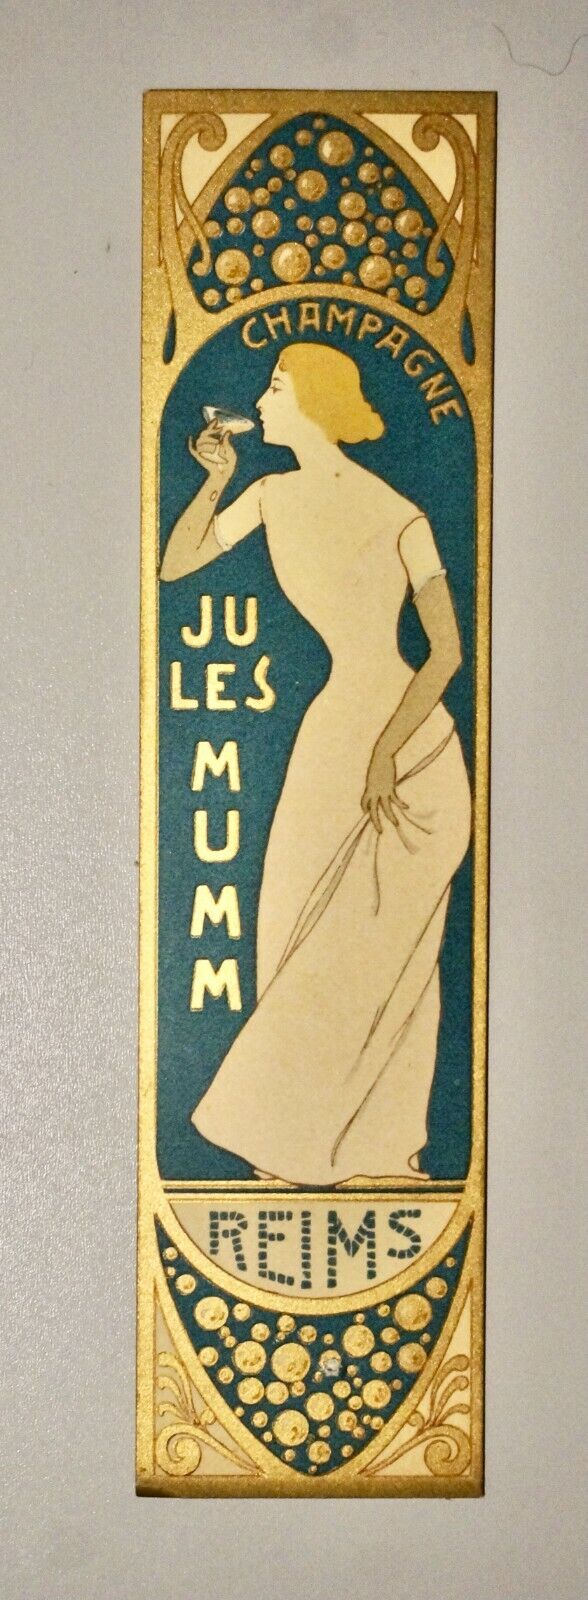 JULES MUMM CHAMPAGNE-BRAND PAGE-ADVERTISING-MAURICE REALIER-DUMAS-1895